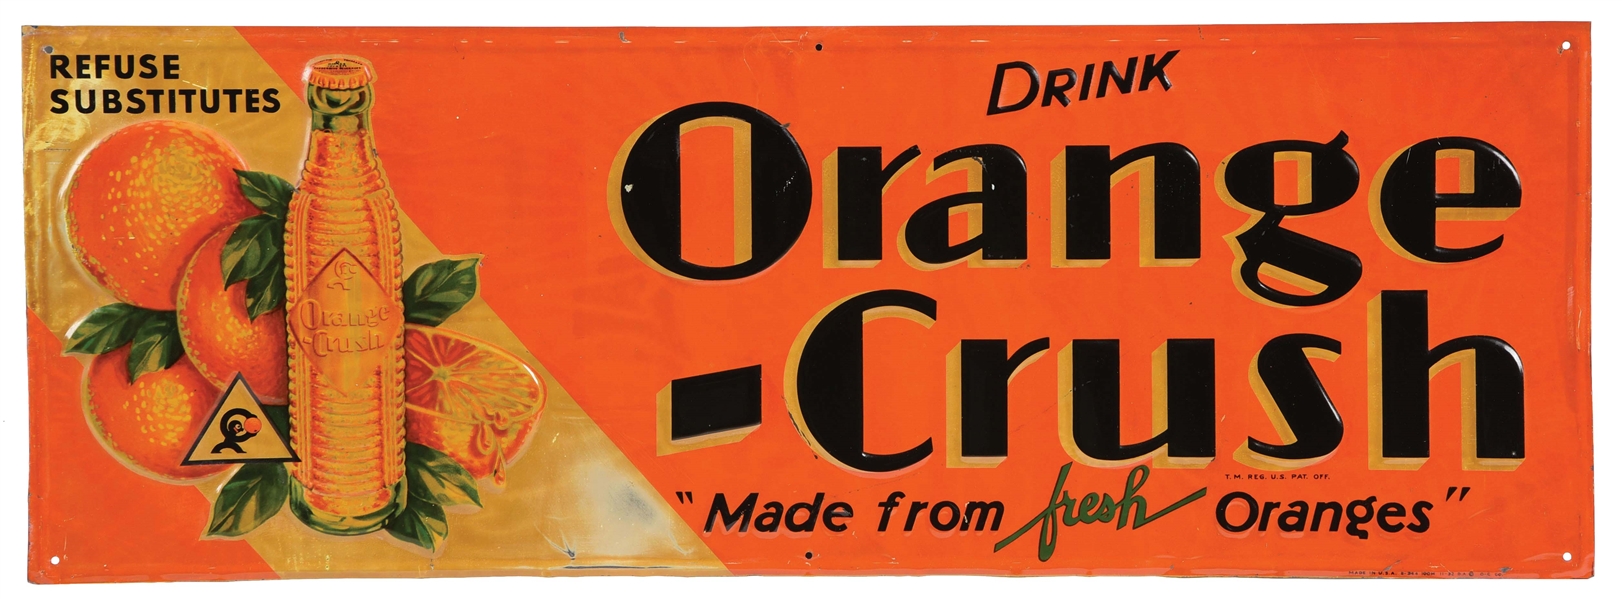 DRINK ORANGE CRUSH SELF-FRAMED EMBOSSED TIN SIGN W/ CRUSHY GRAPHIC.